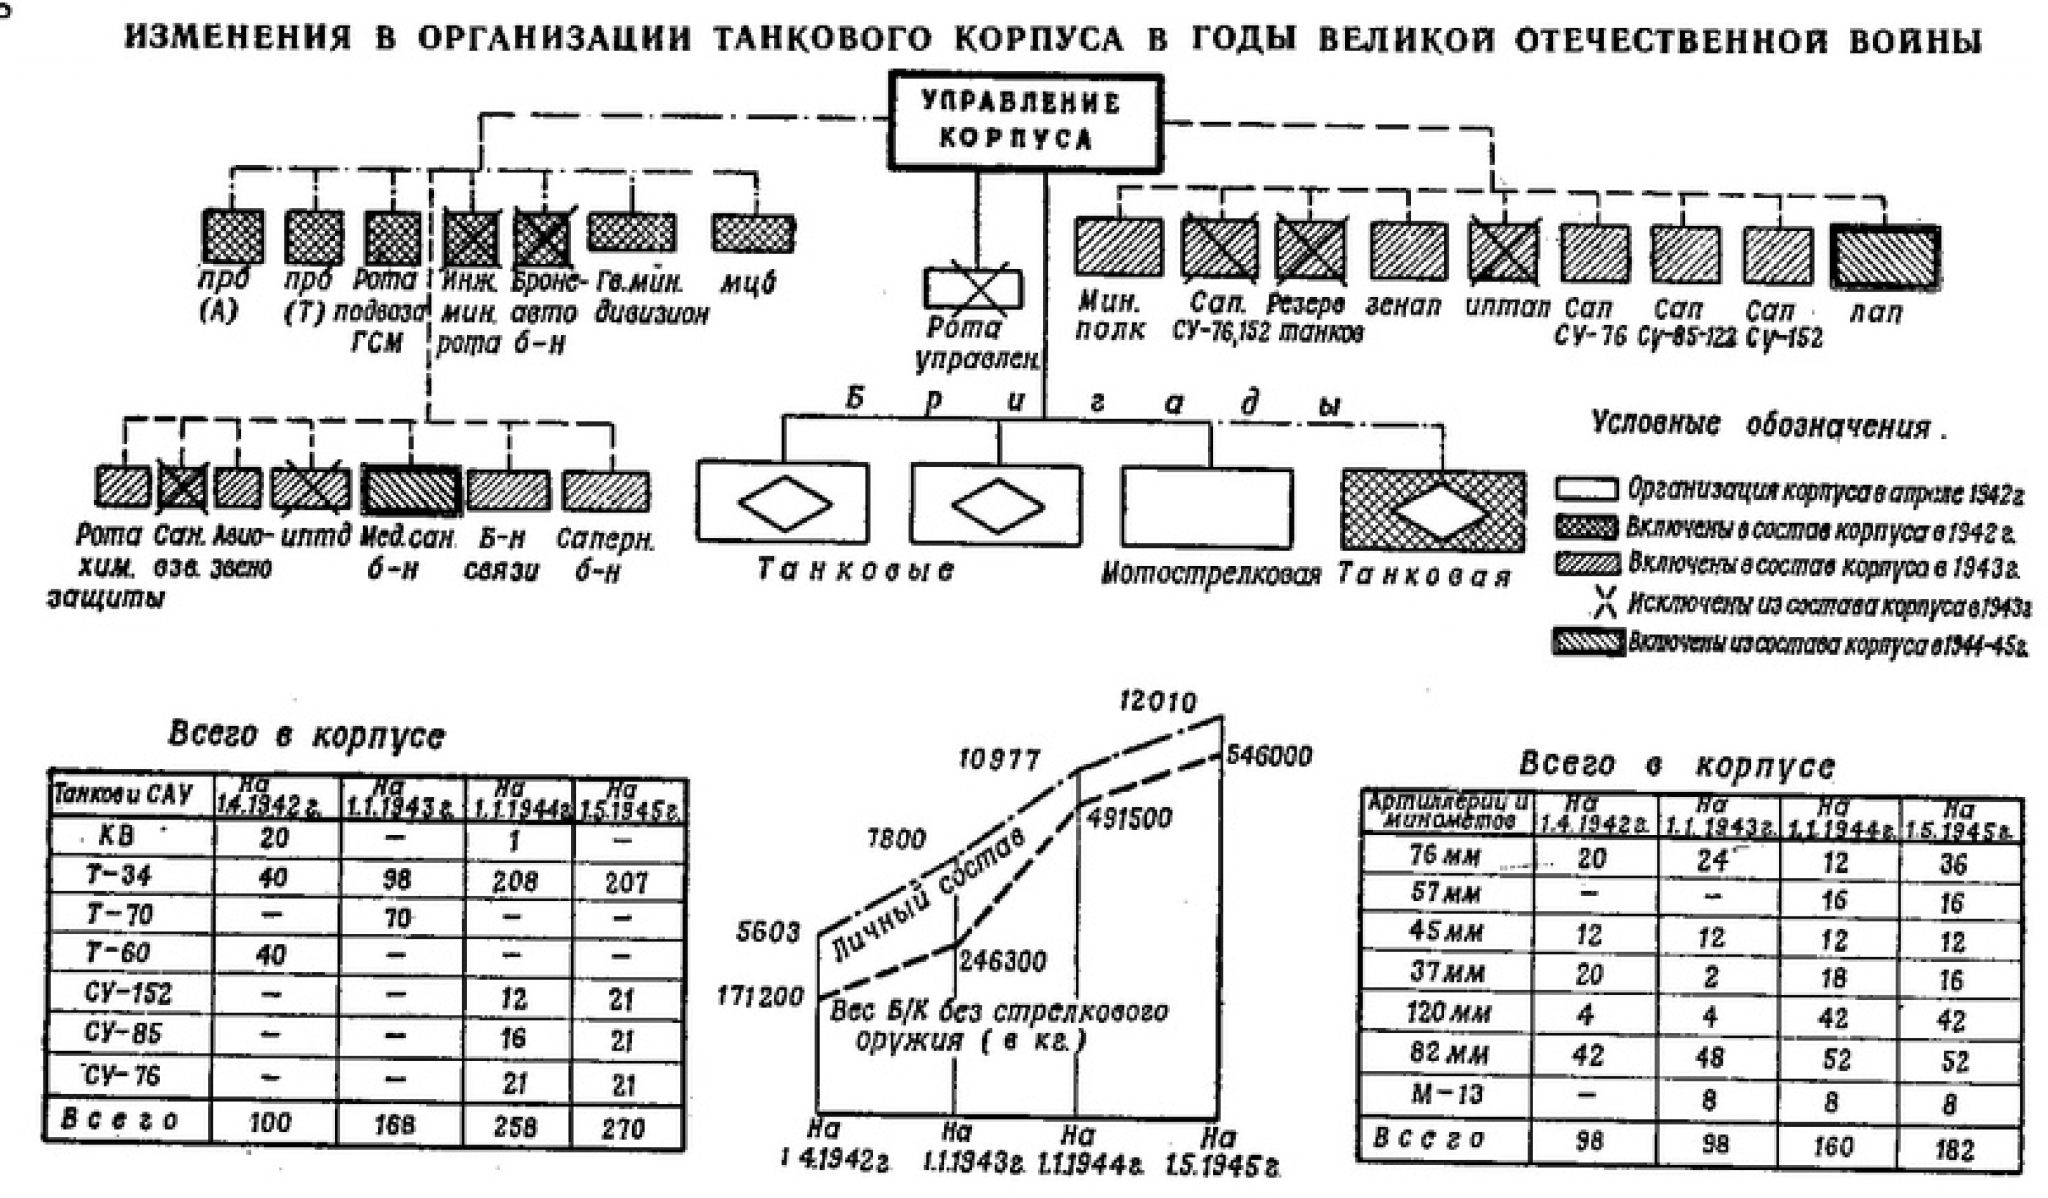 Структура танковой дивизии вермахта 1943